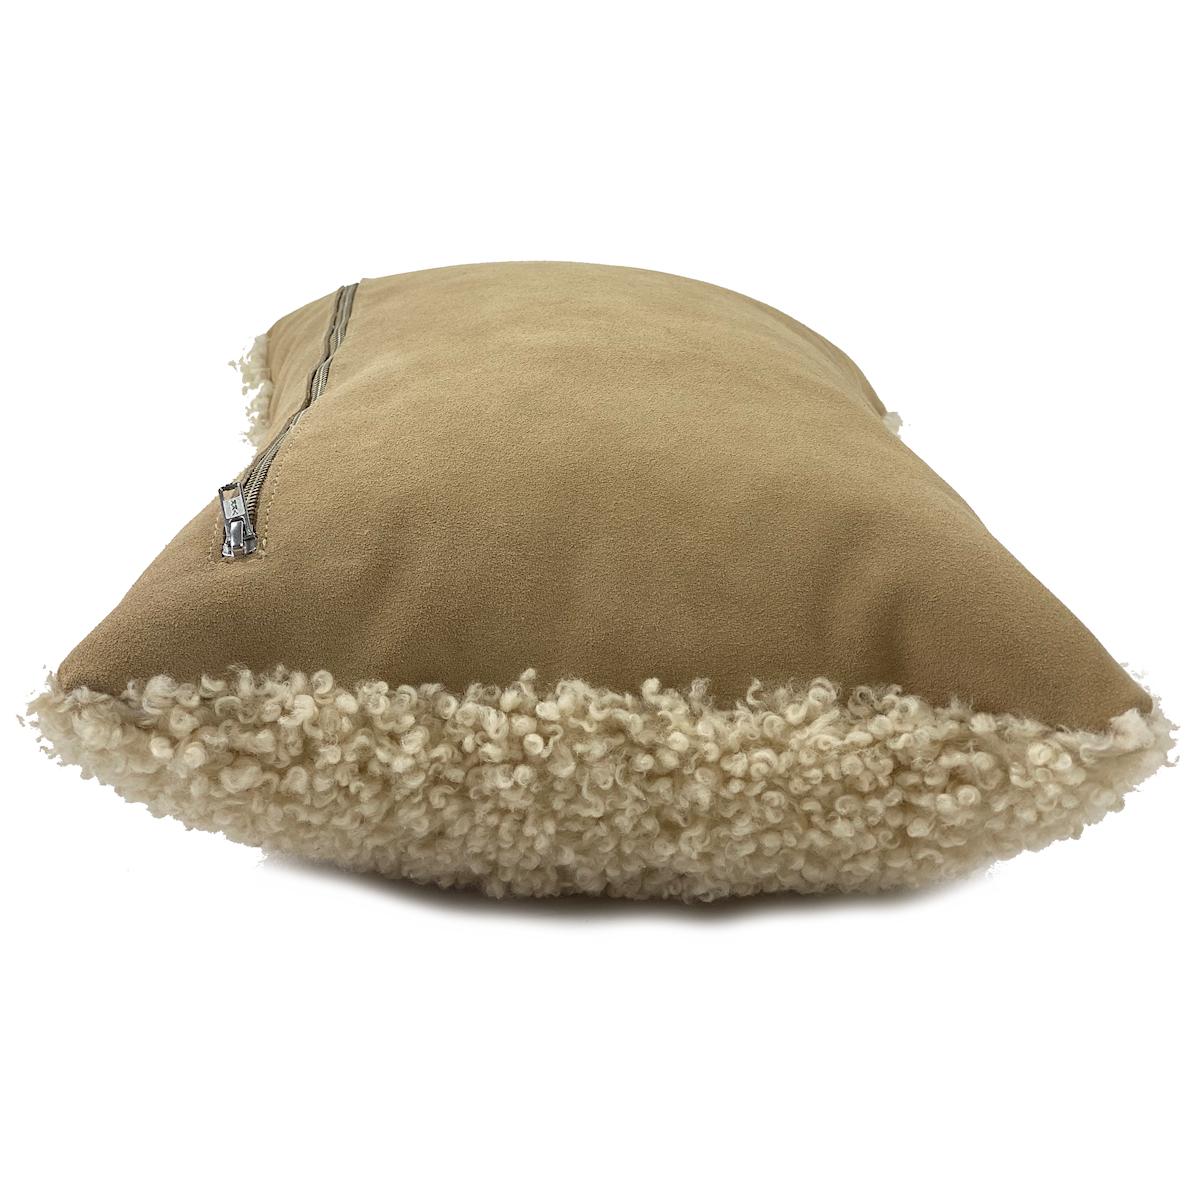 Scandinavian Modern Shearling Sheepskin Pillow, Dark Linen Boucle - 35x50cm For Sale